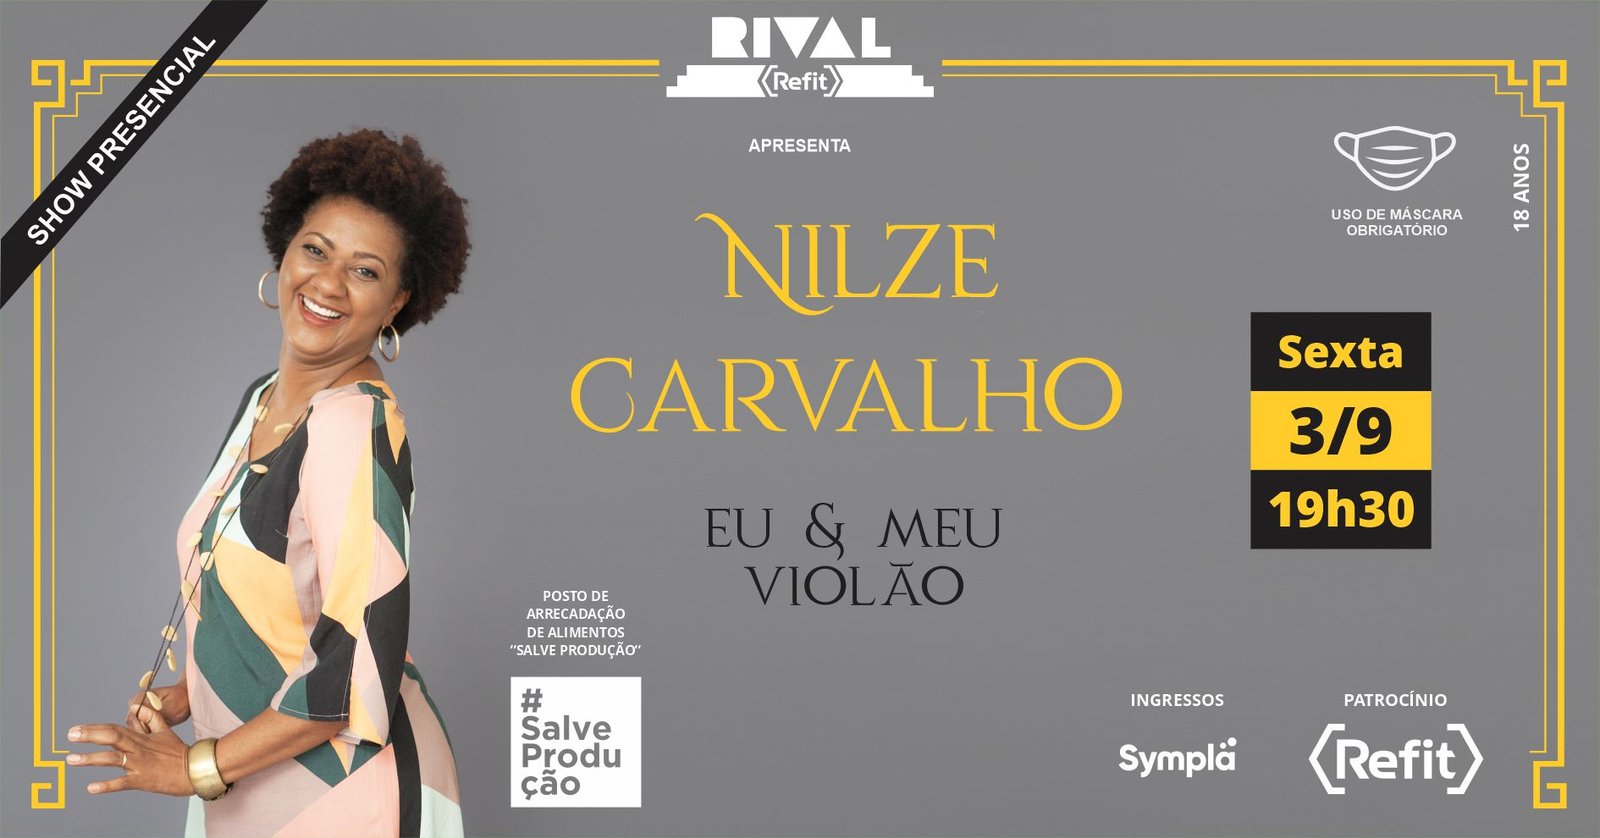 Nilze Carvalho